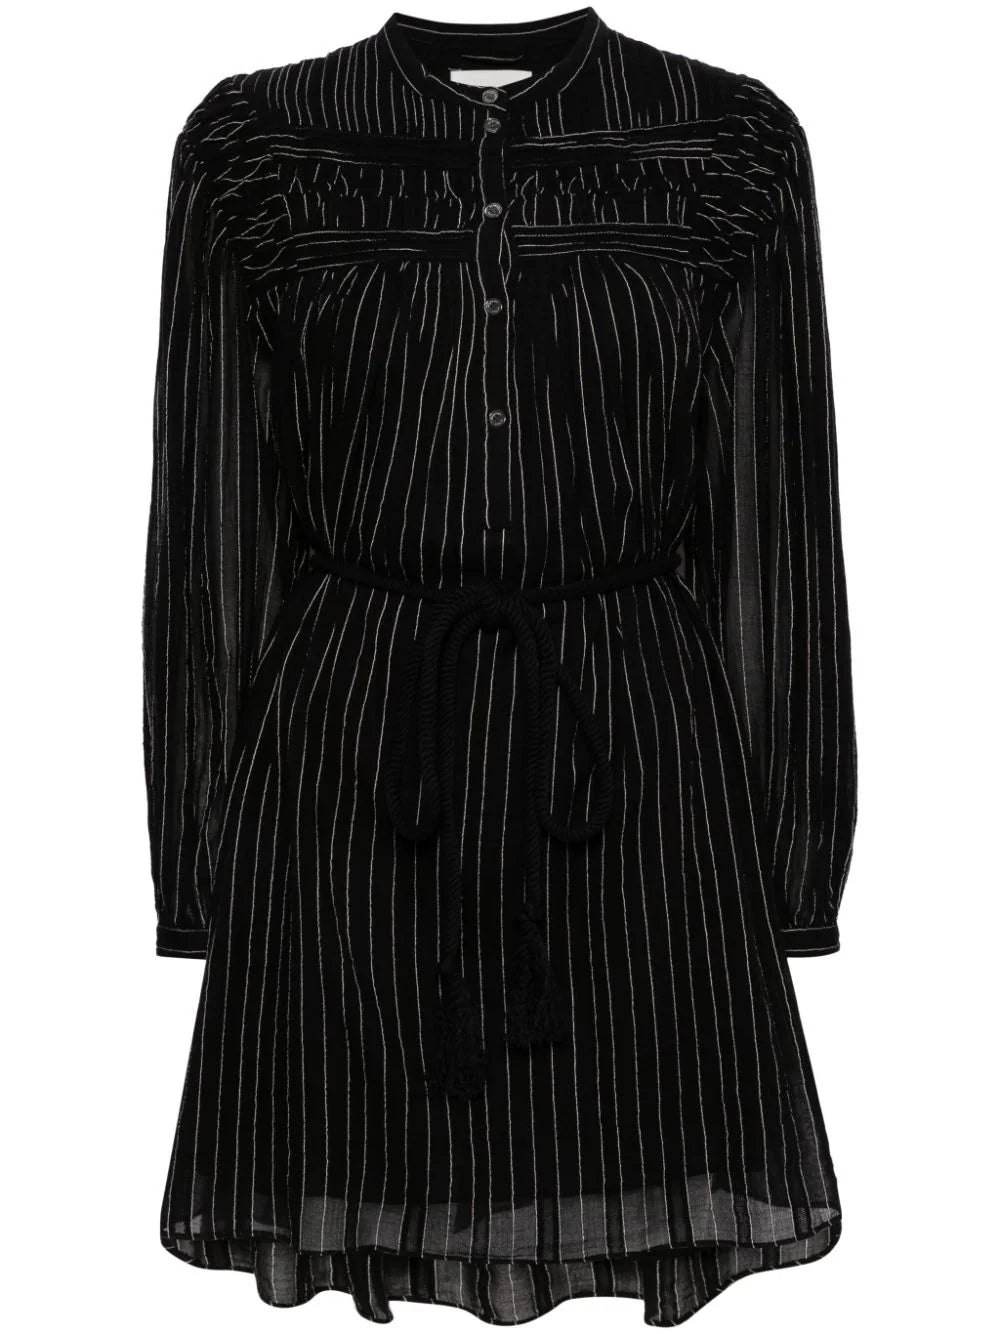 Leozi Dress in Faded Black